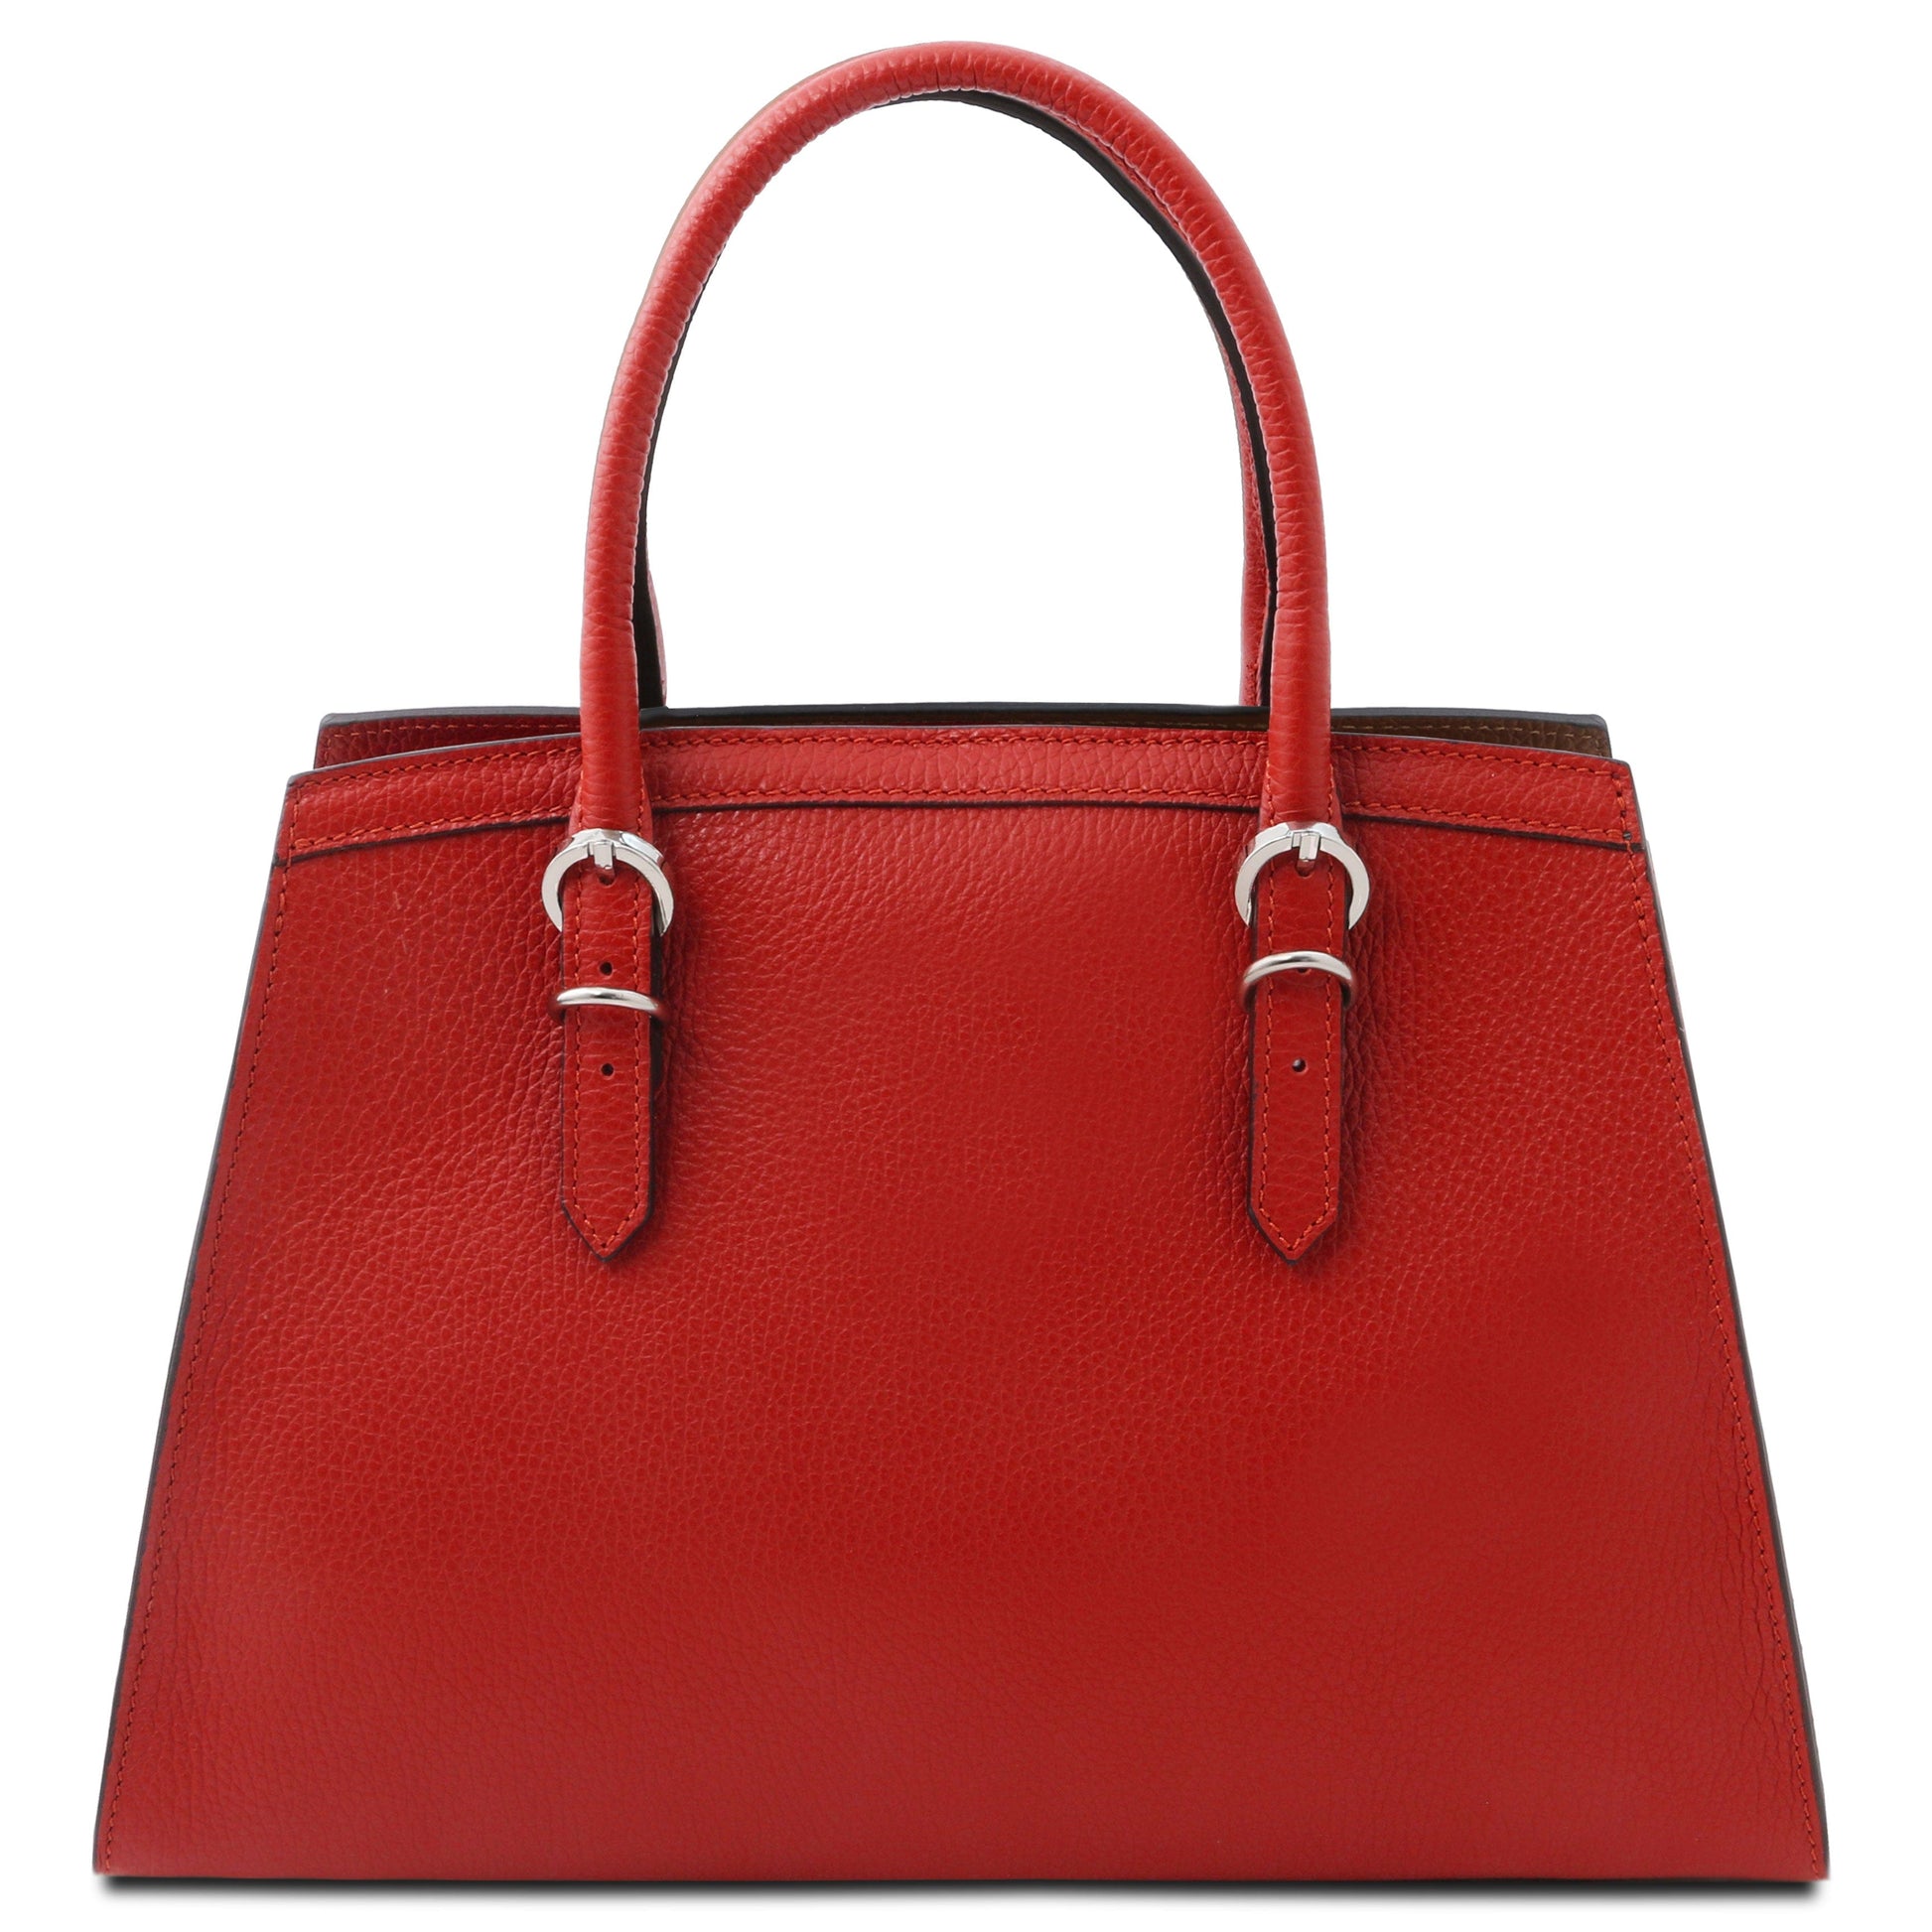 TL Bag - Leather handbag | TL142147 - Premium Leather handbags - Just €140.30! Shop now at San Rocco Italia